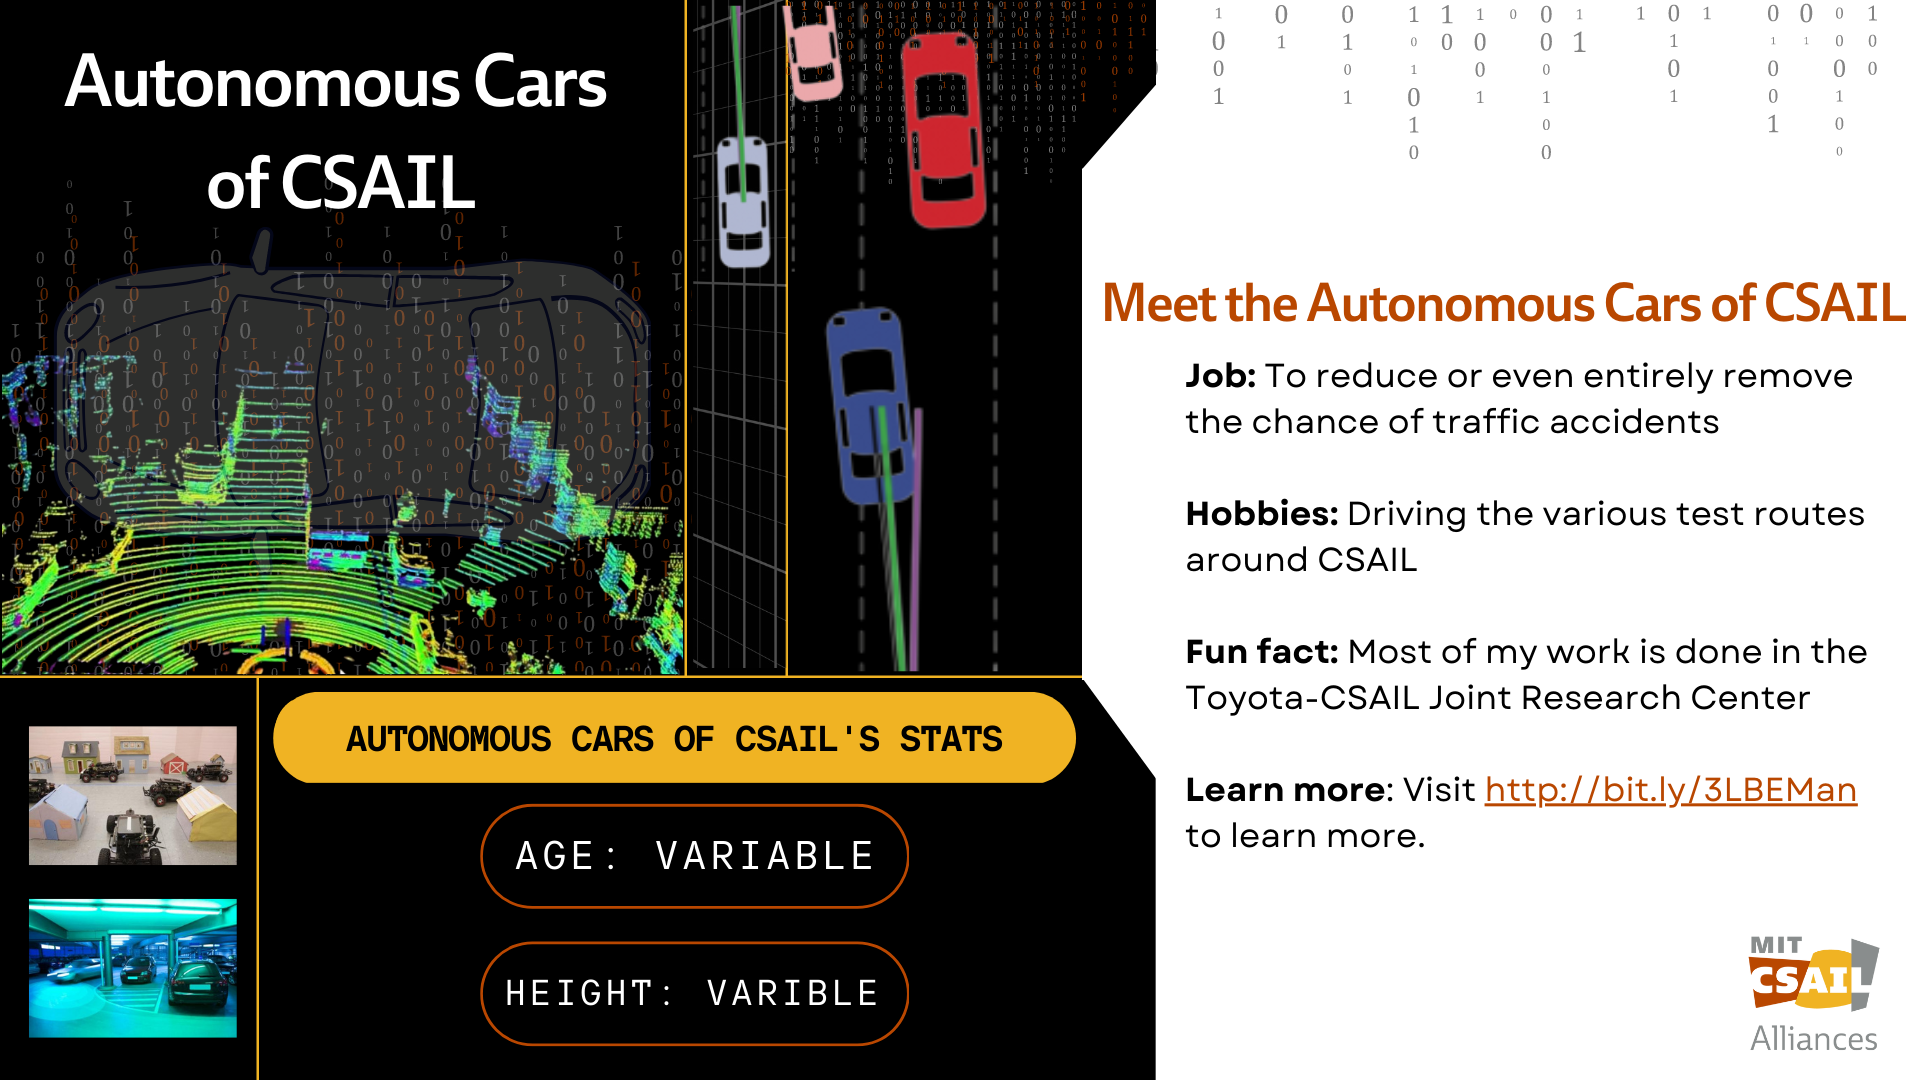 Collage of autonomous car vector graphics and robot photos; with text that reads "Autonomous Cars of CSAIL"